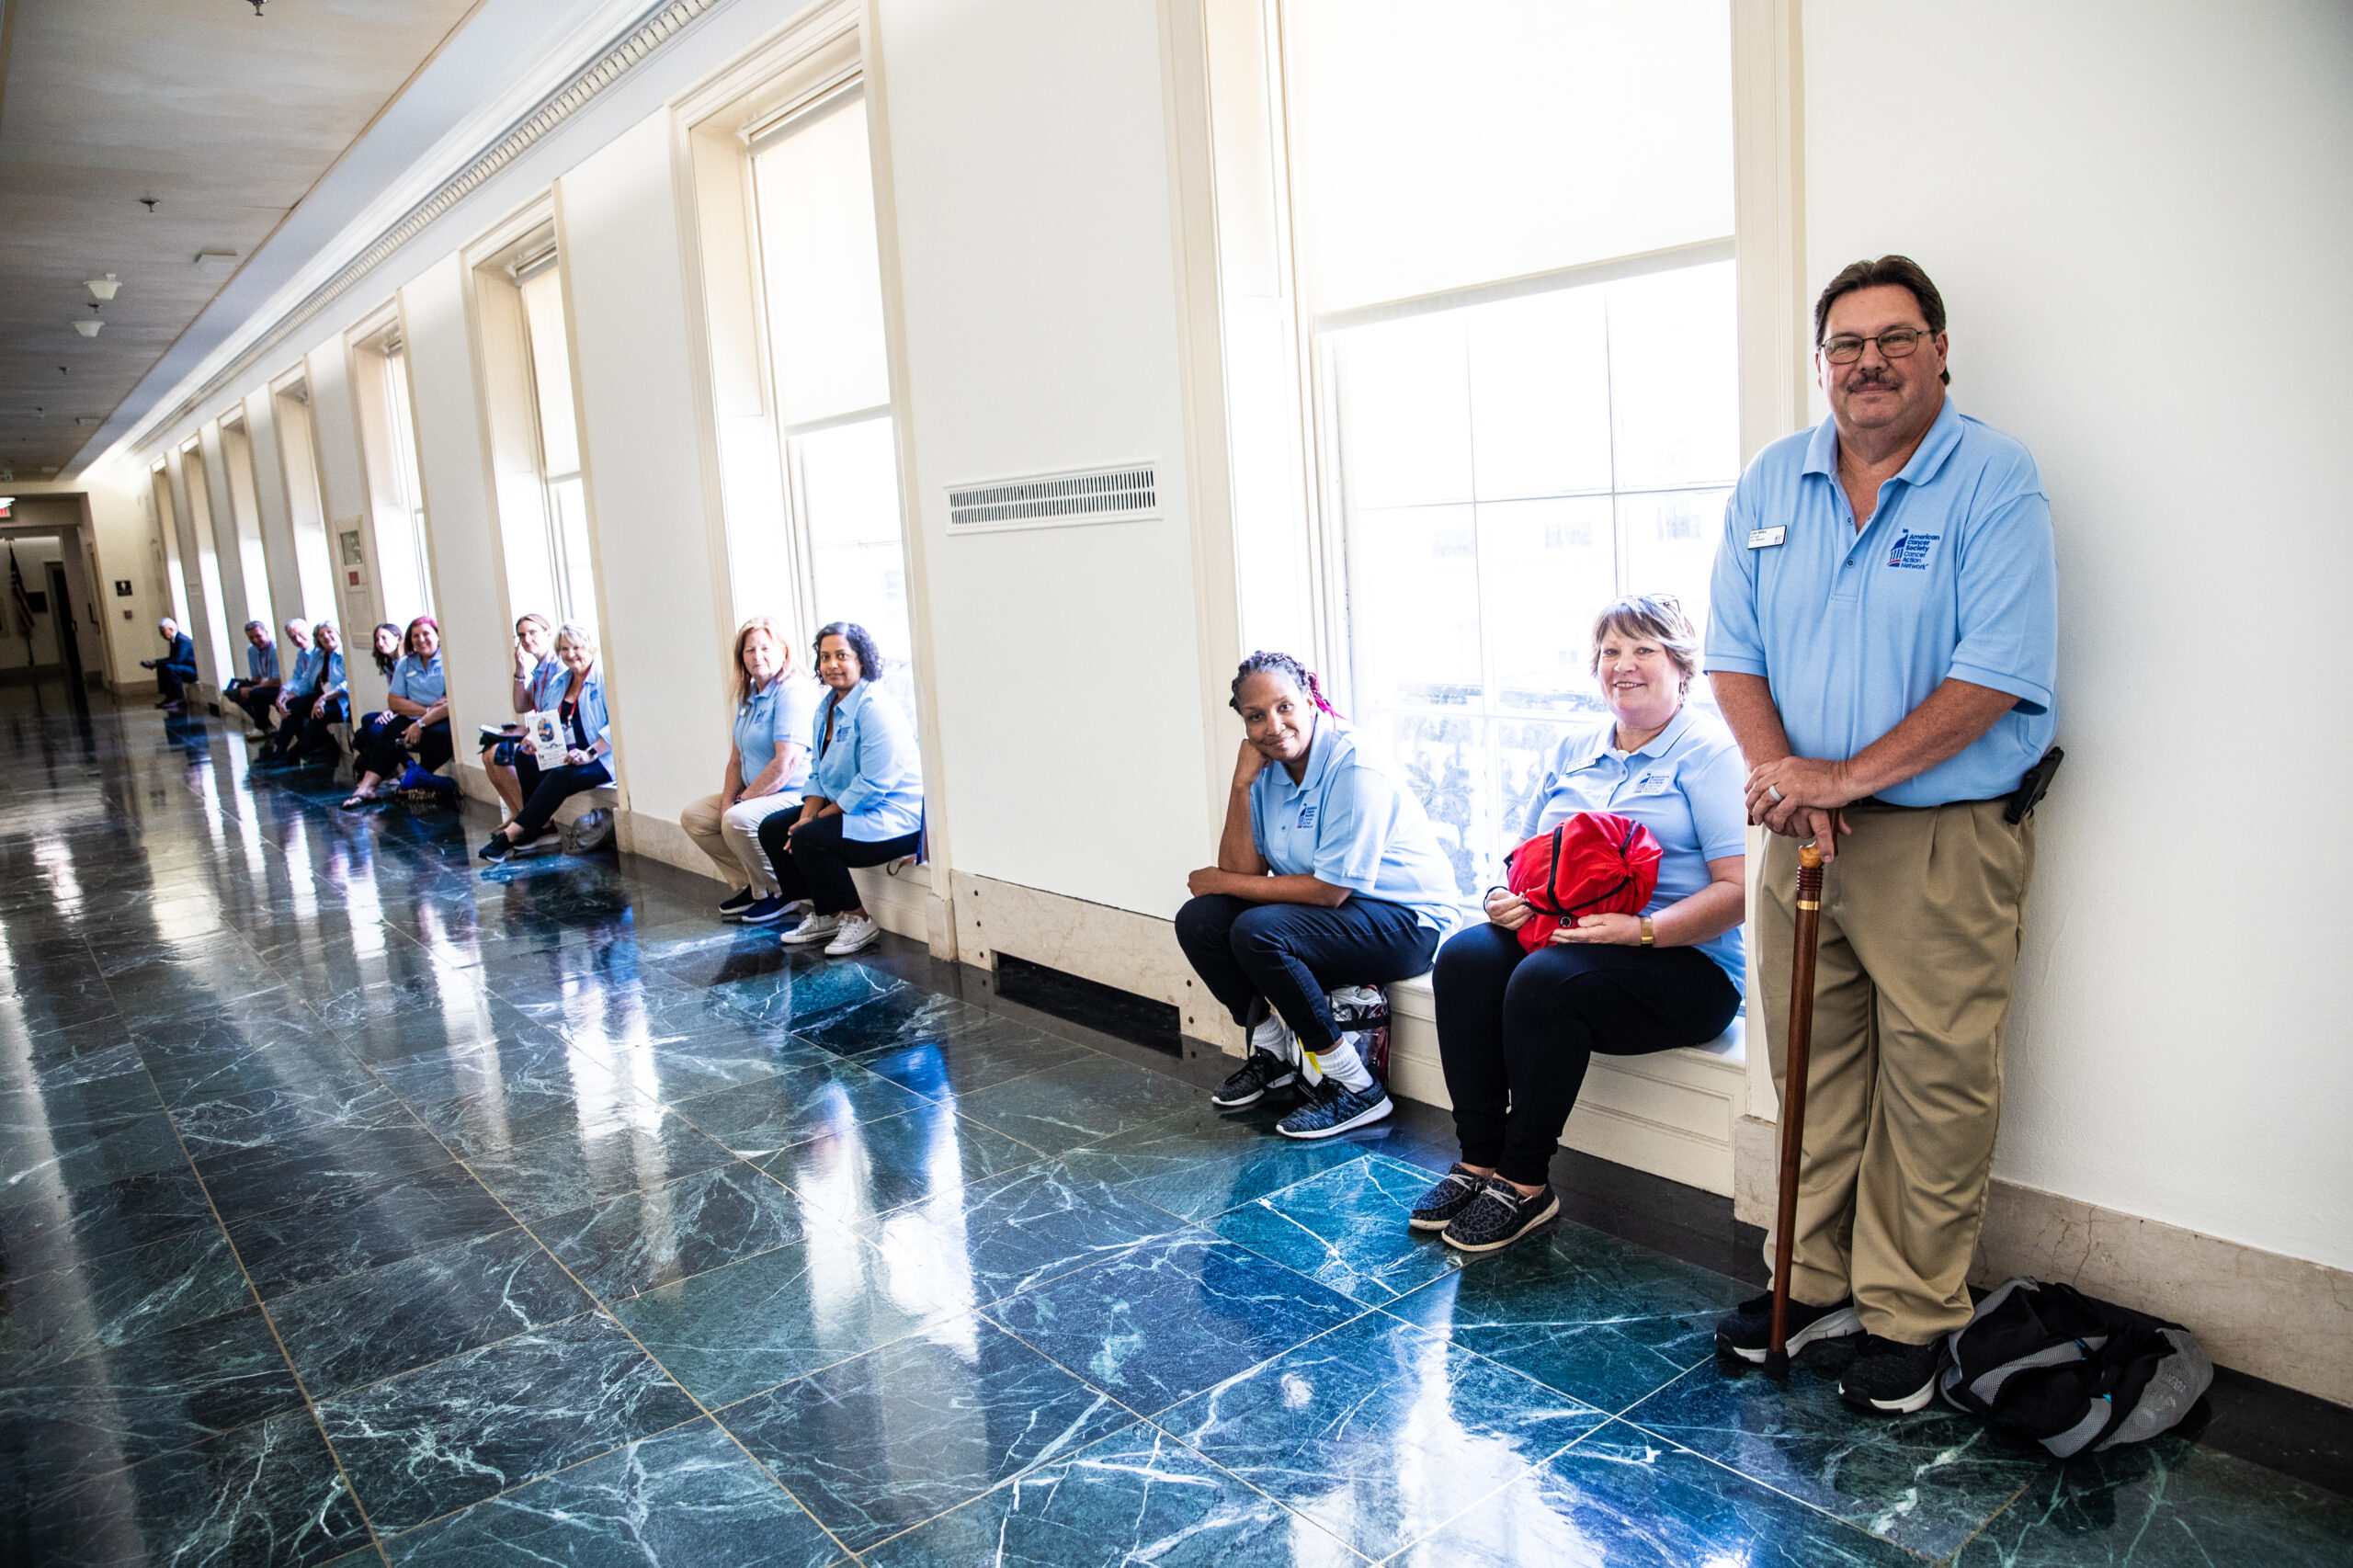 volunteers waiting inside the Capitol